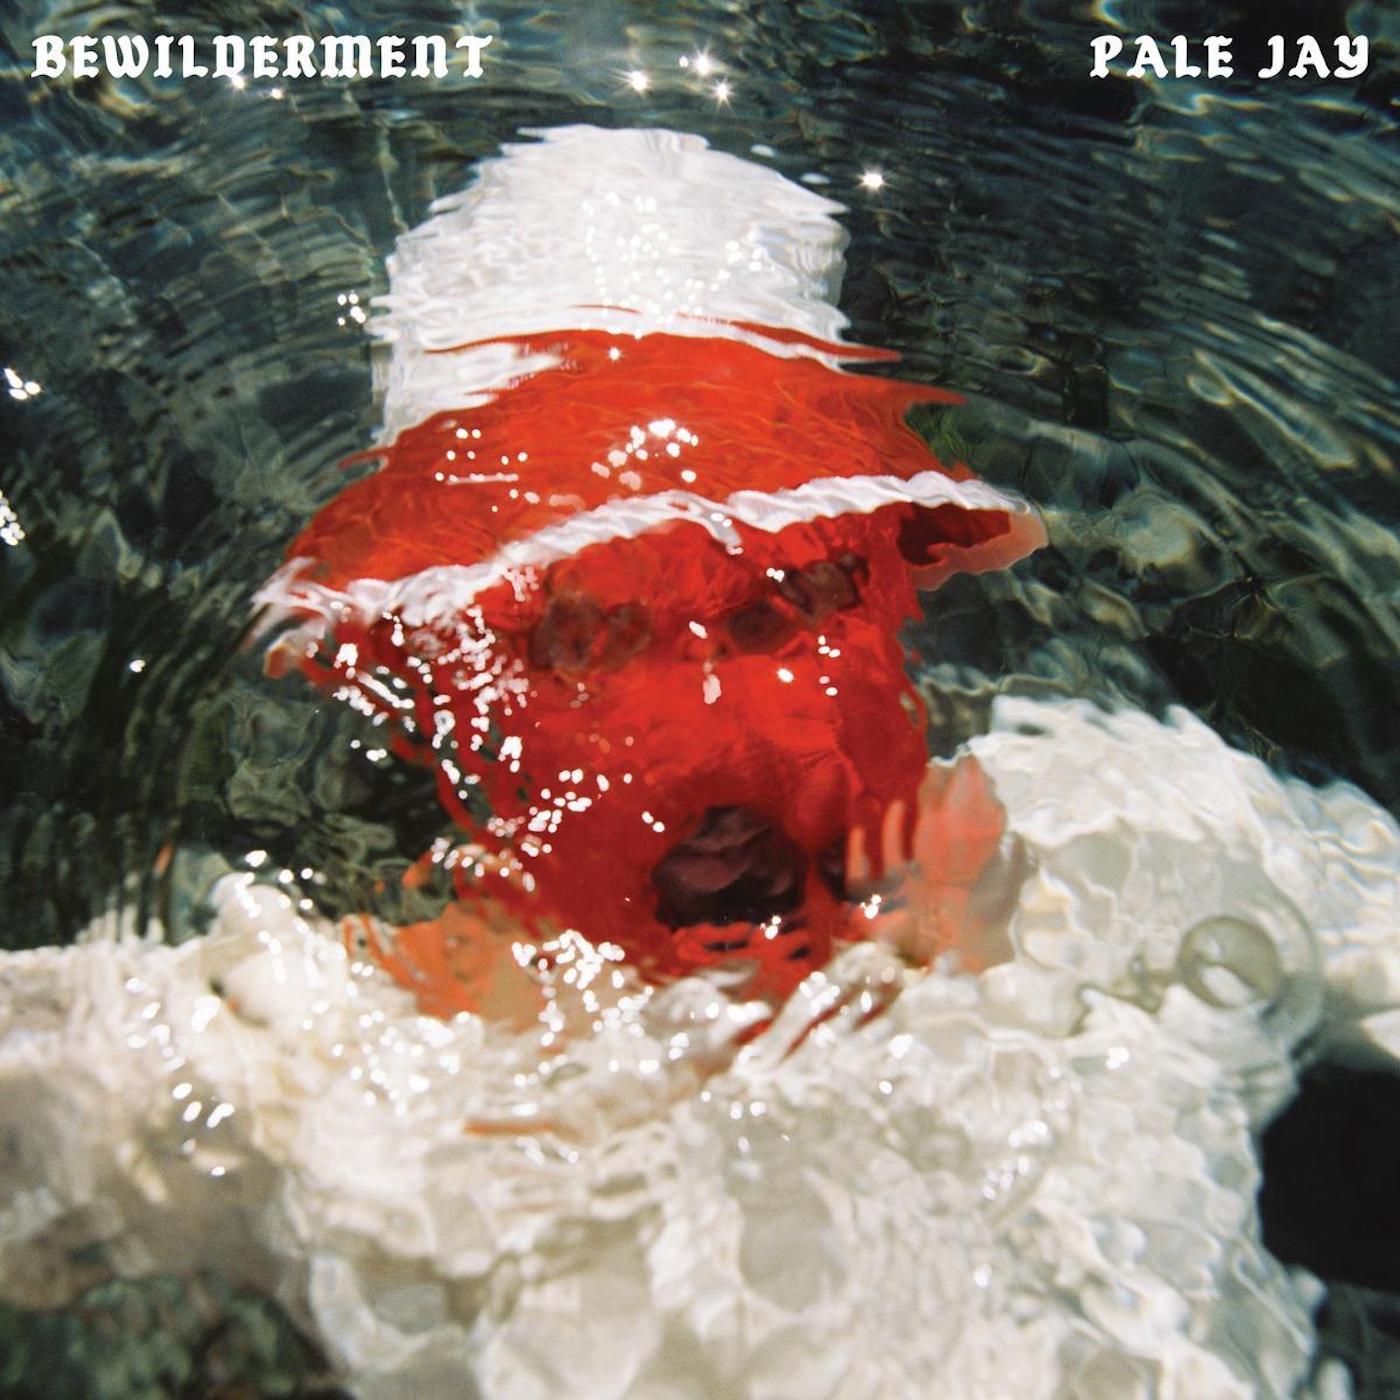 Pale Jay - Bewilderment [Seafoam Green Vinyl, Exclusive]